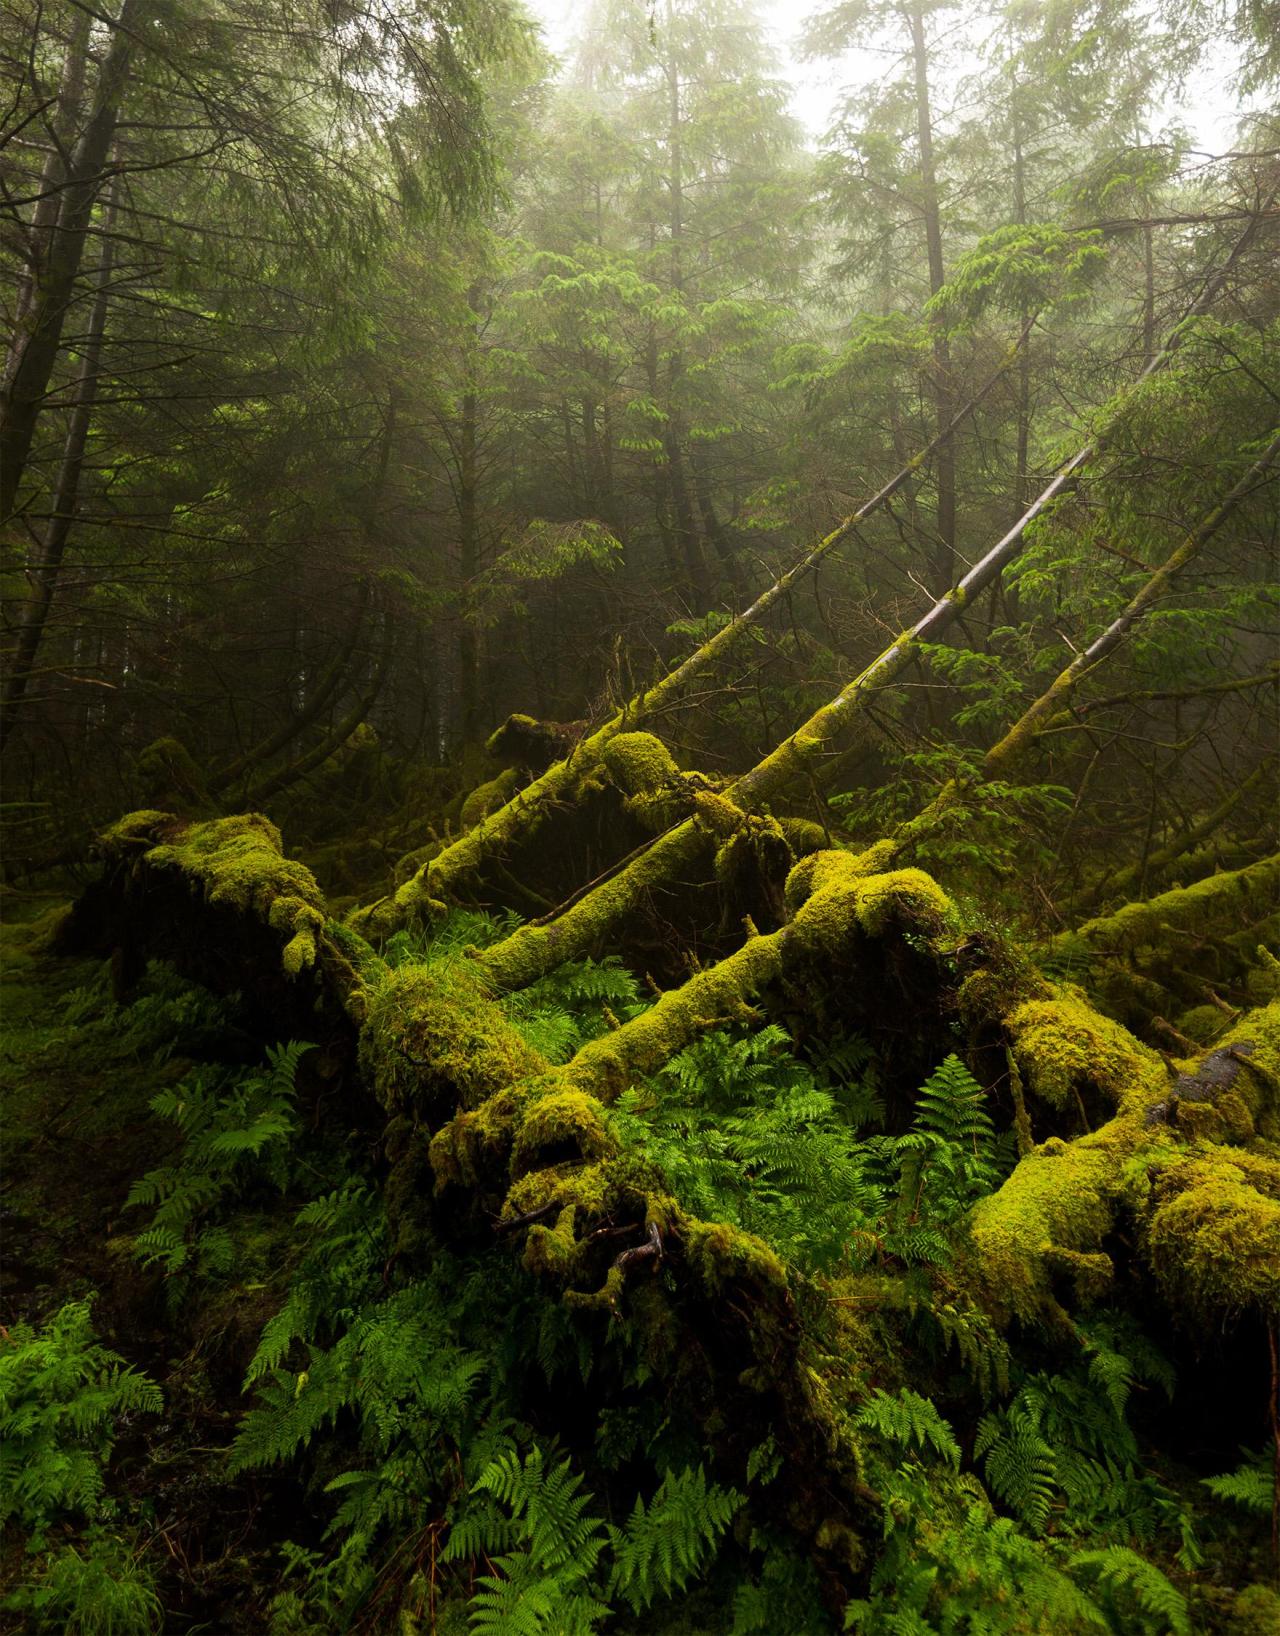 A hauntingly beautiful forest on the Isle of Skye, Scotland [1760x2250] [OC] - Author: jetclarke on reddit